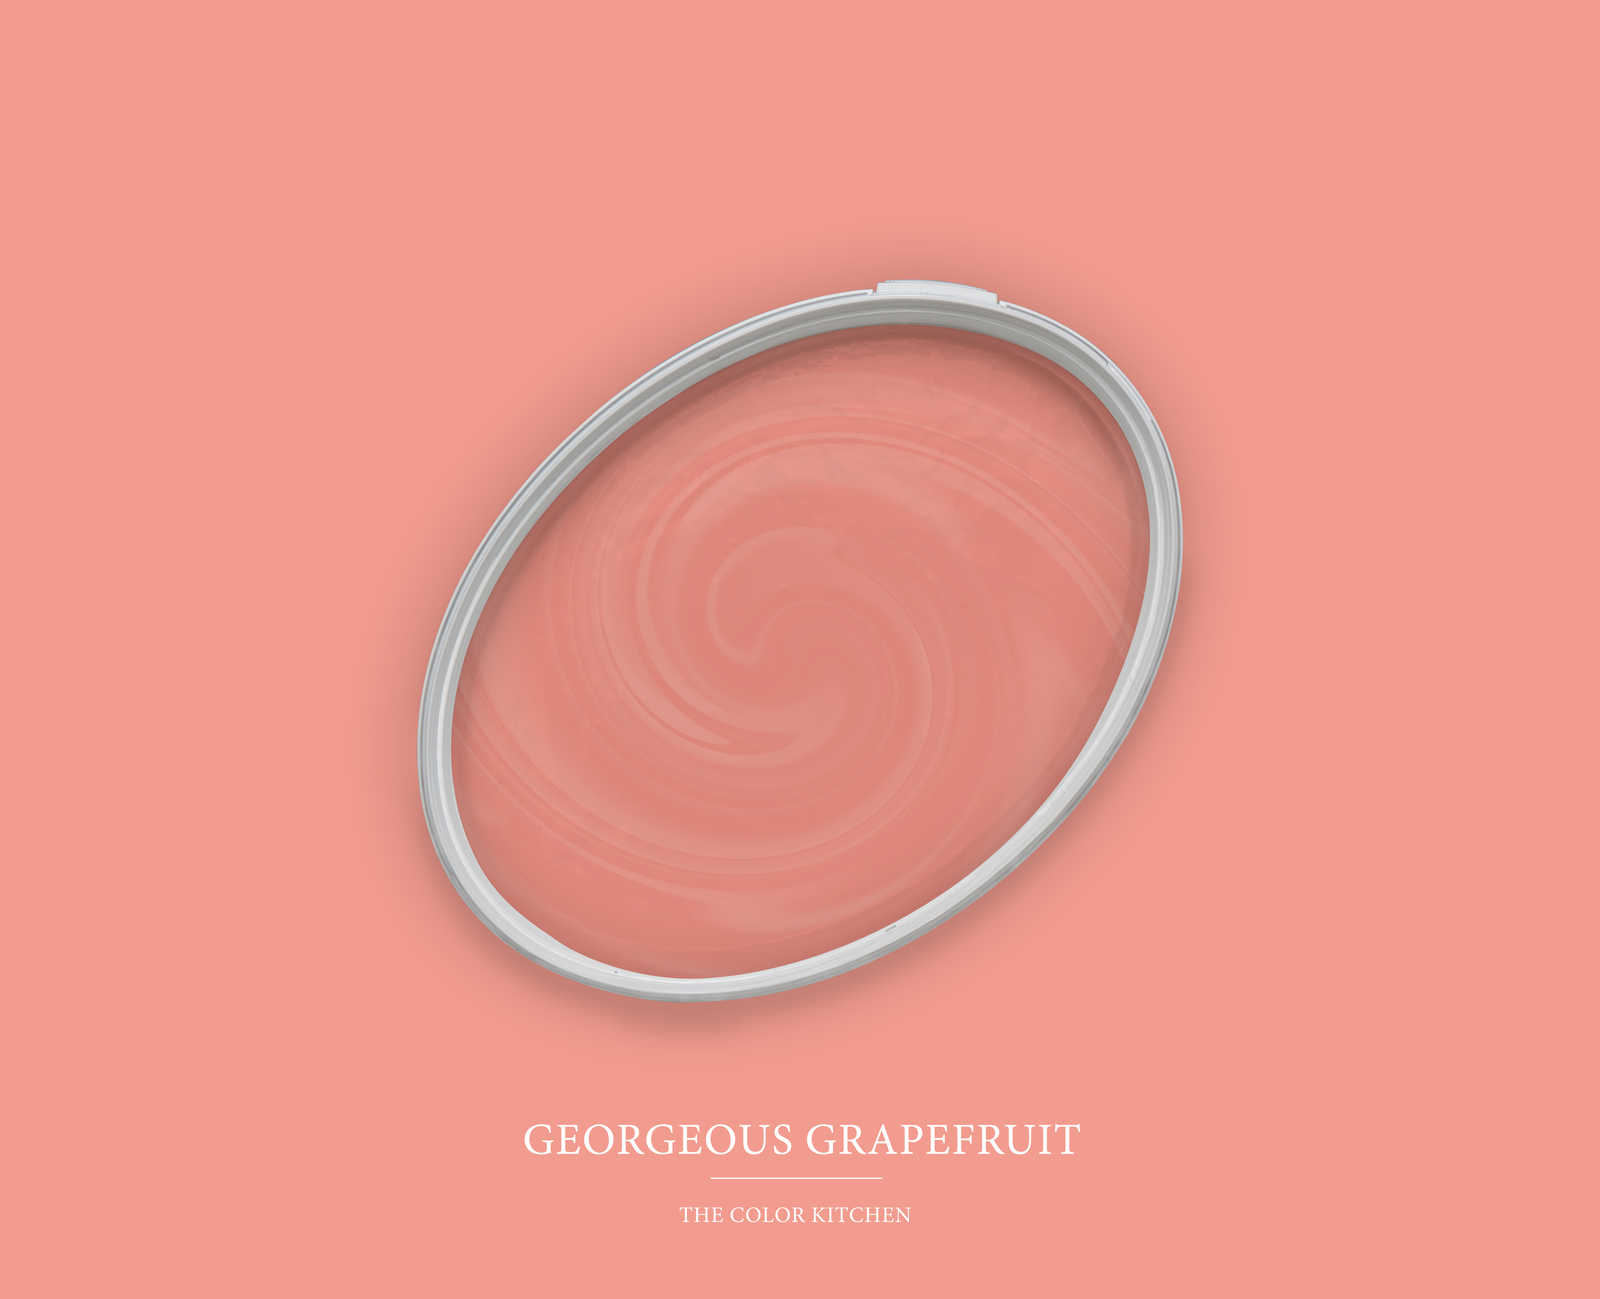         Wandfarbe in knalligem Koralle »Georgeous Grapefruit« TCK7004 – 2,5 Liter
    